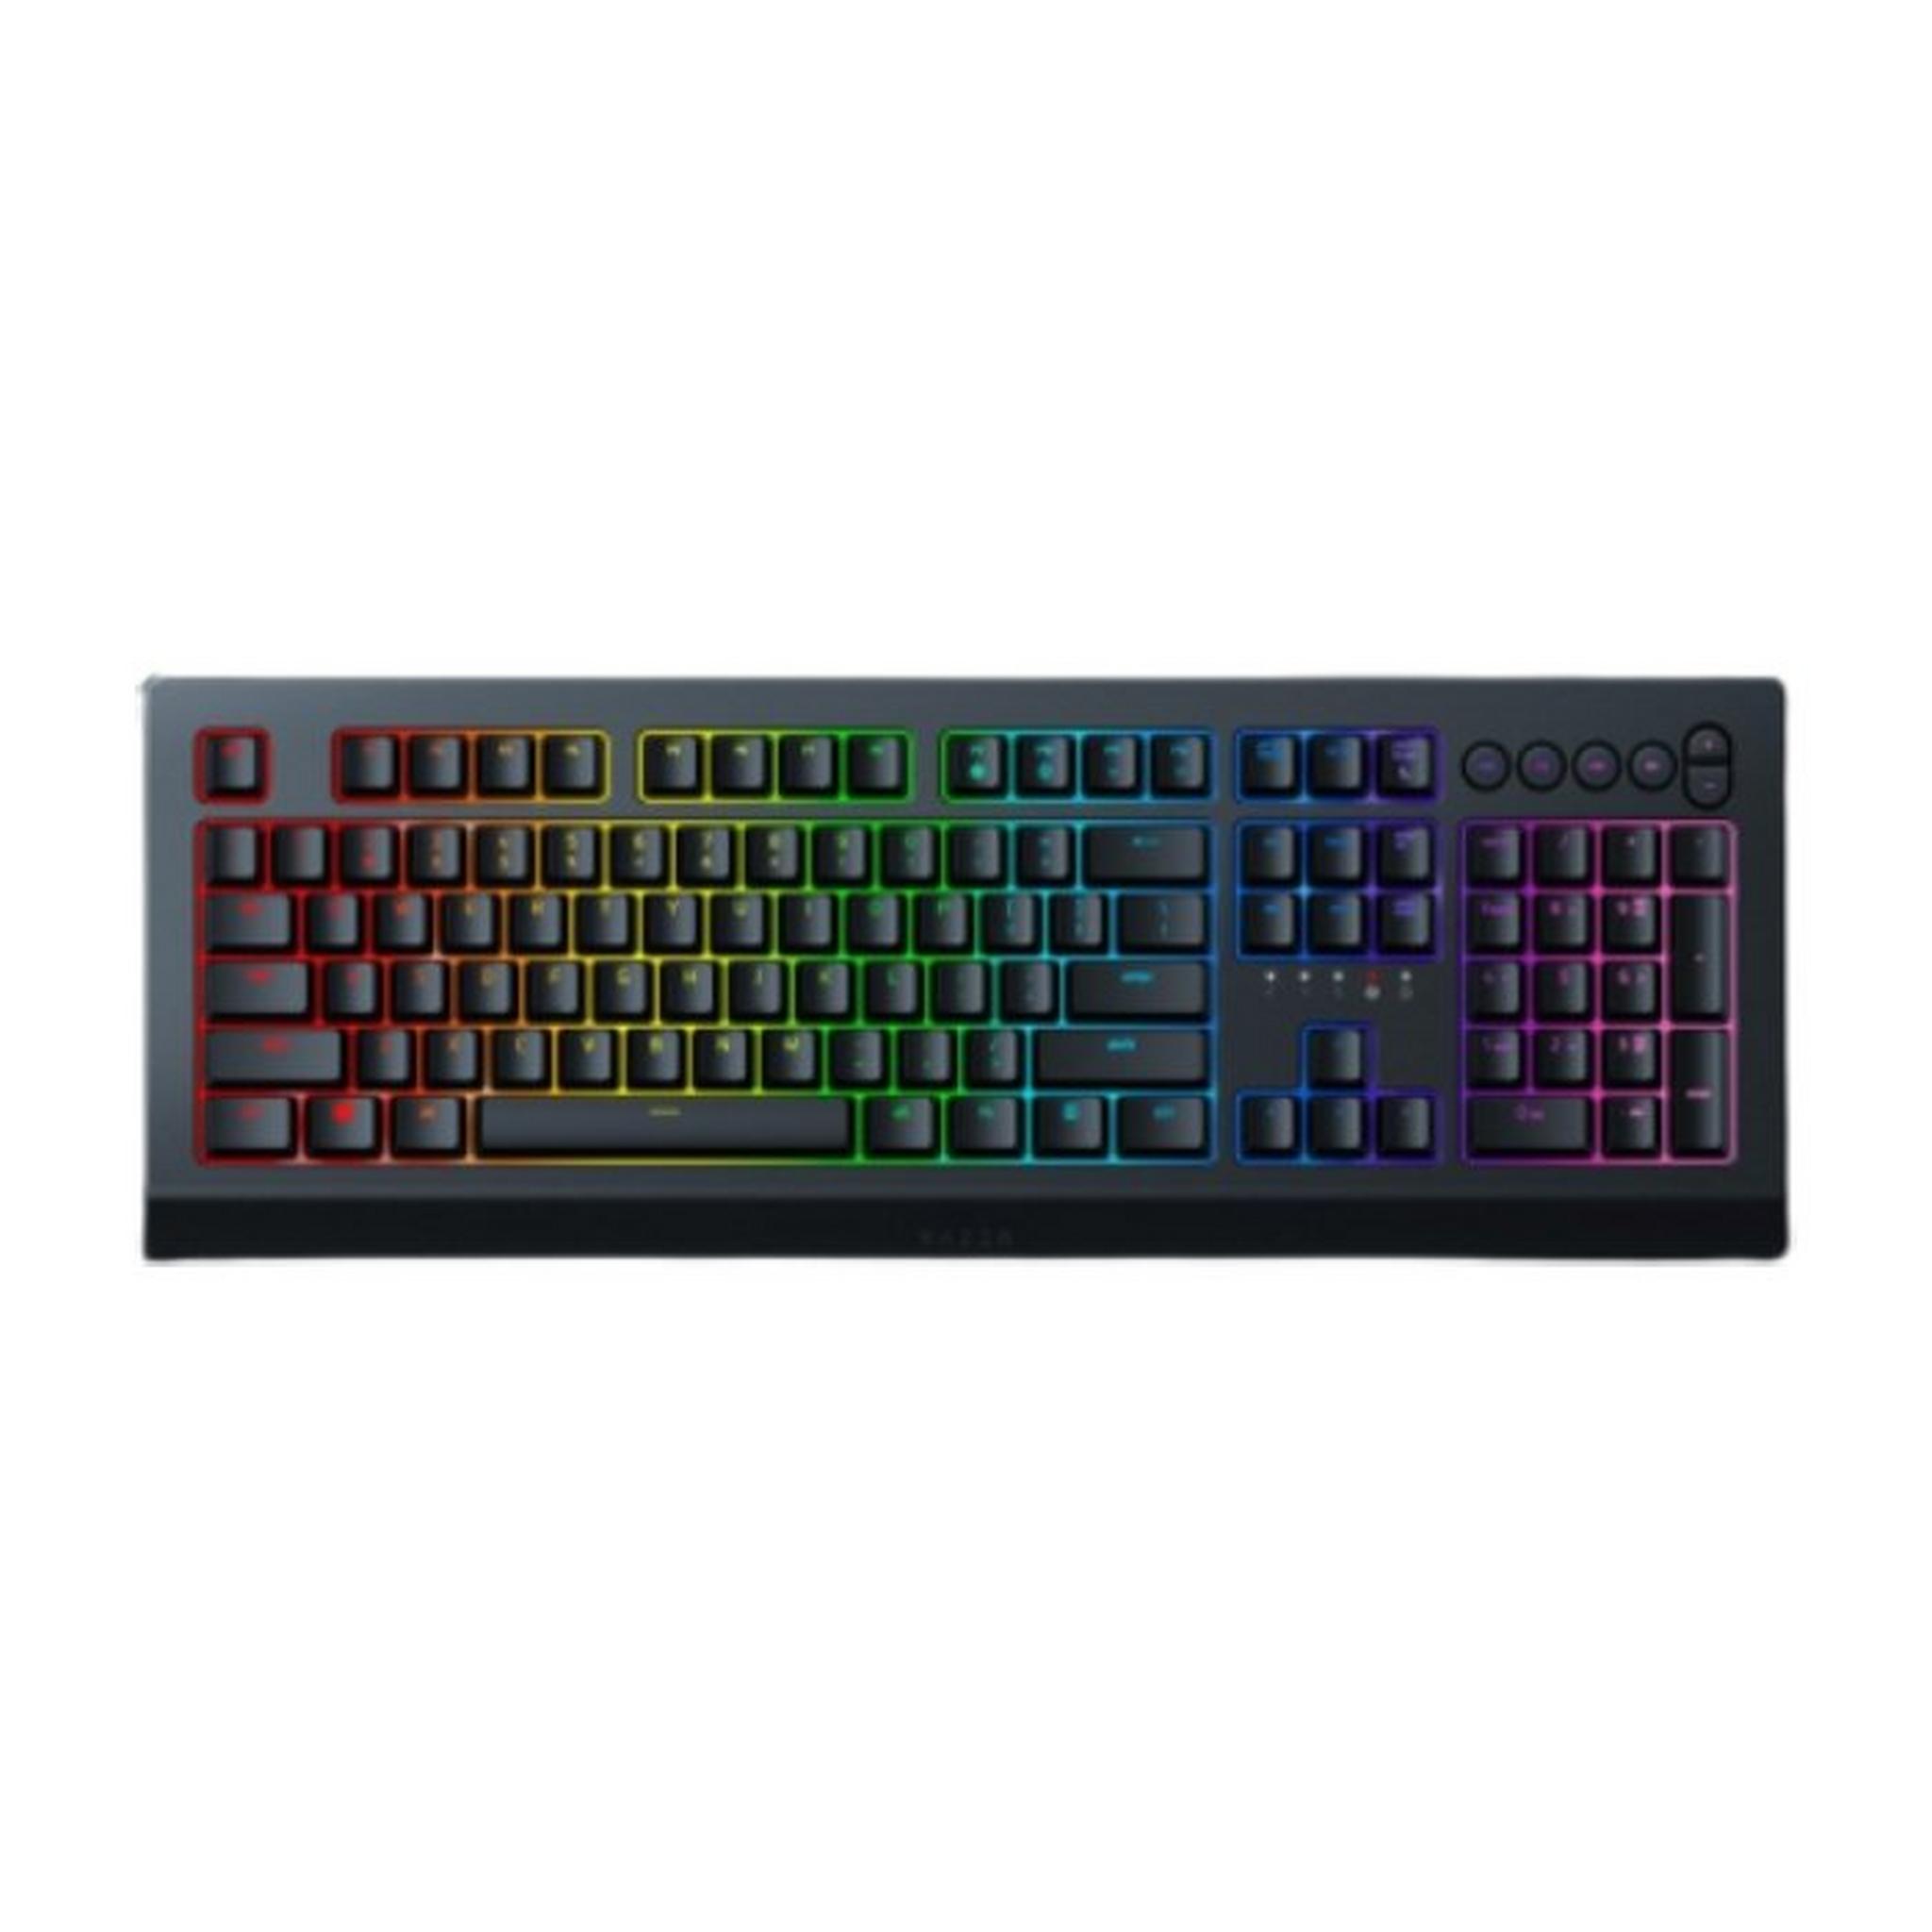 Razer Cynosa V2 Chroma RGB Gaming Keyboard